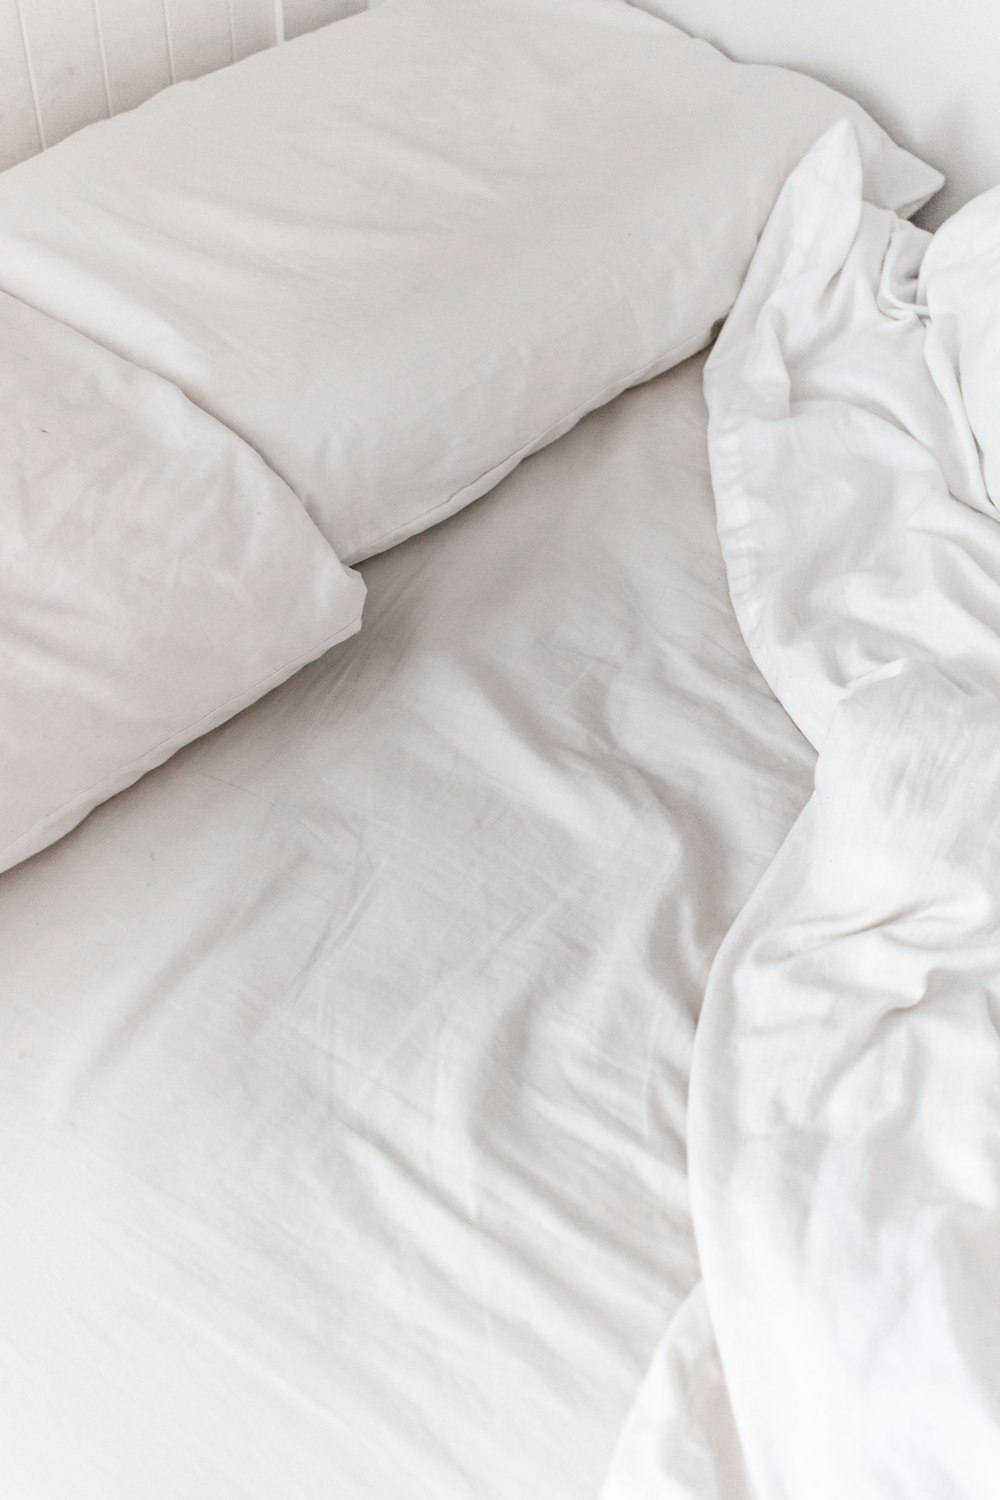 têxtil branco na cama branca